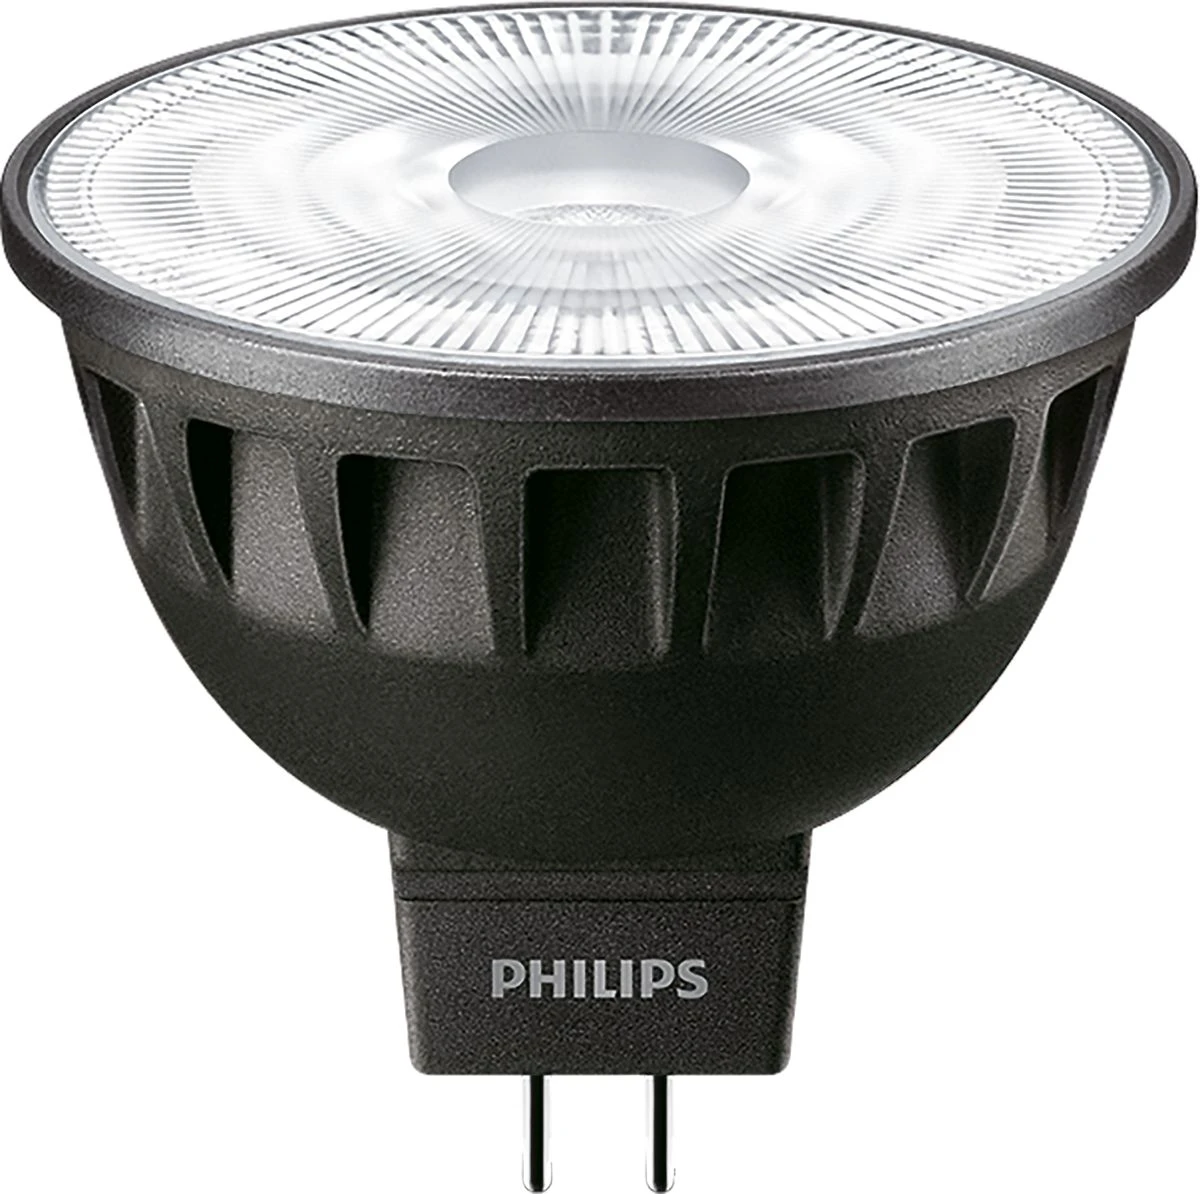 Philips LED-lamp EXPC6735